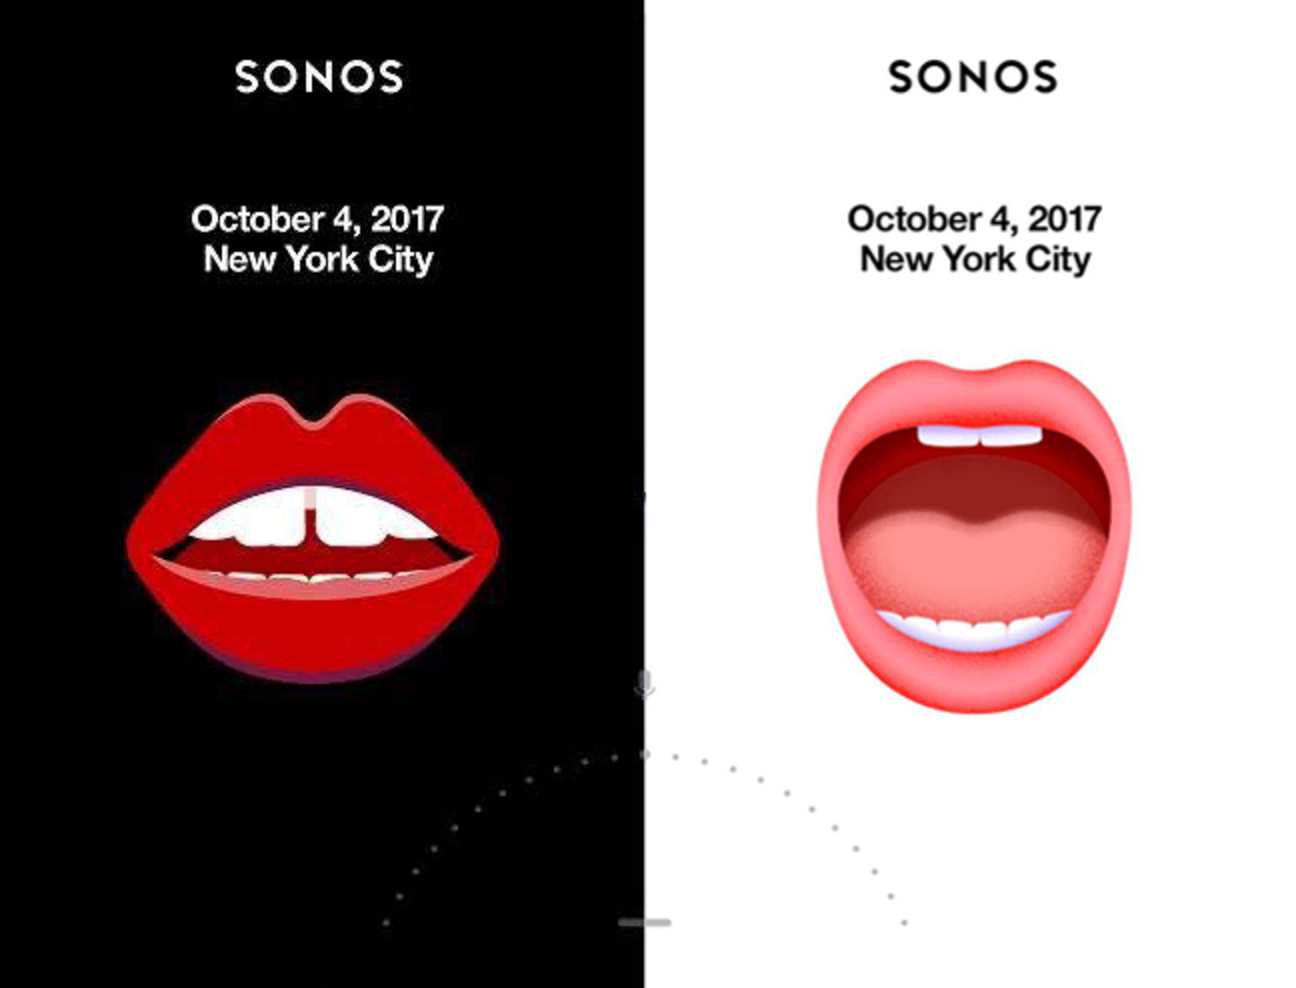 Sonos invite to New York City smart speaker event